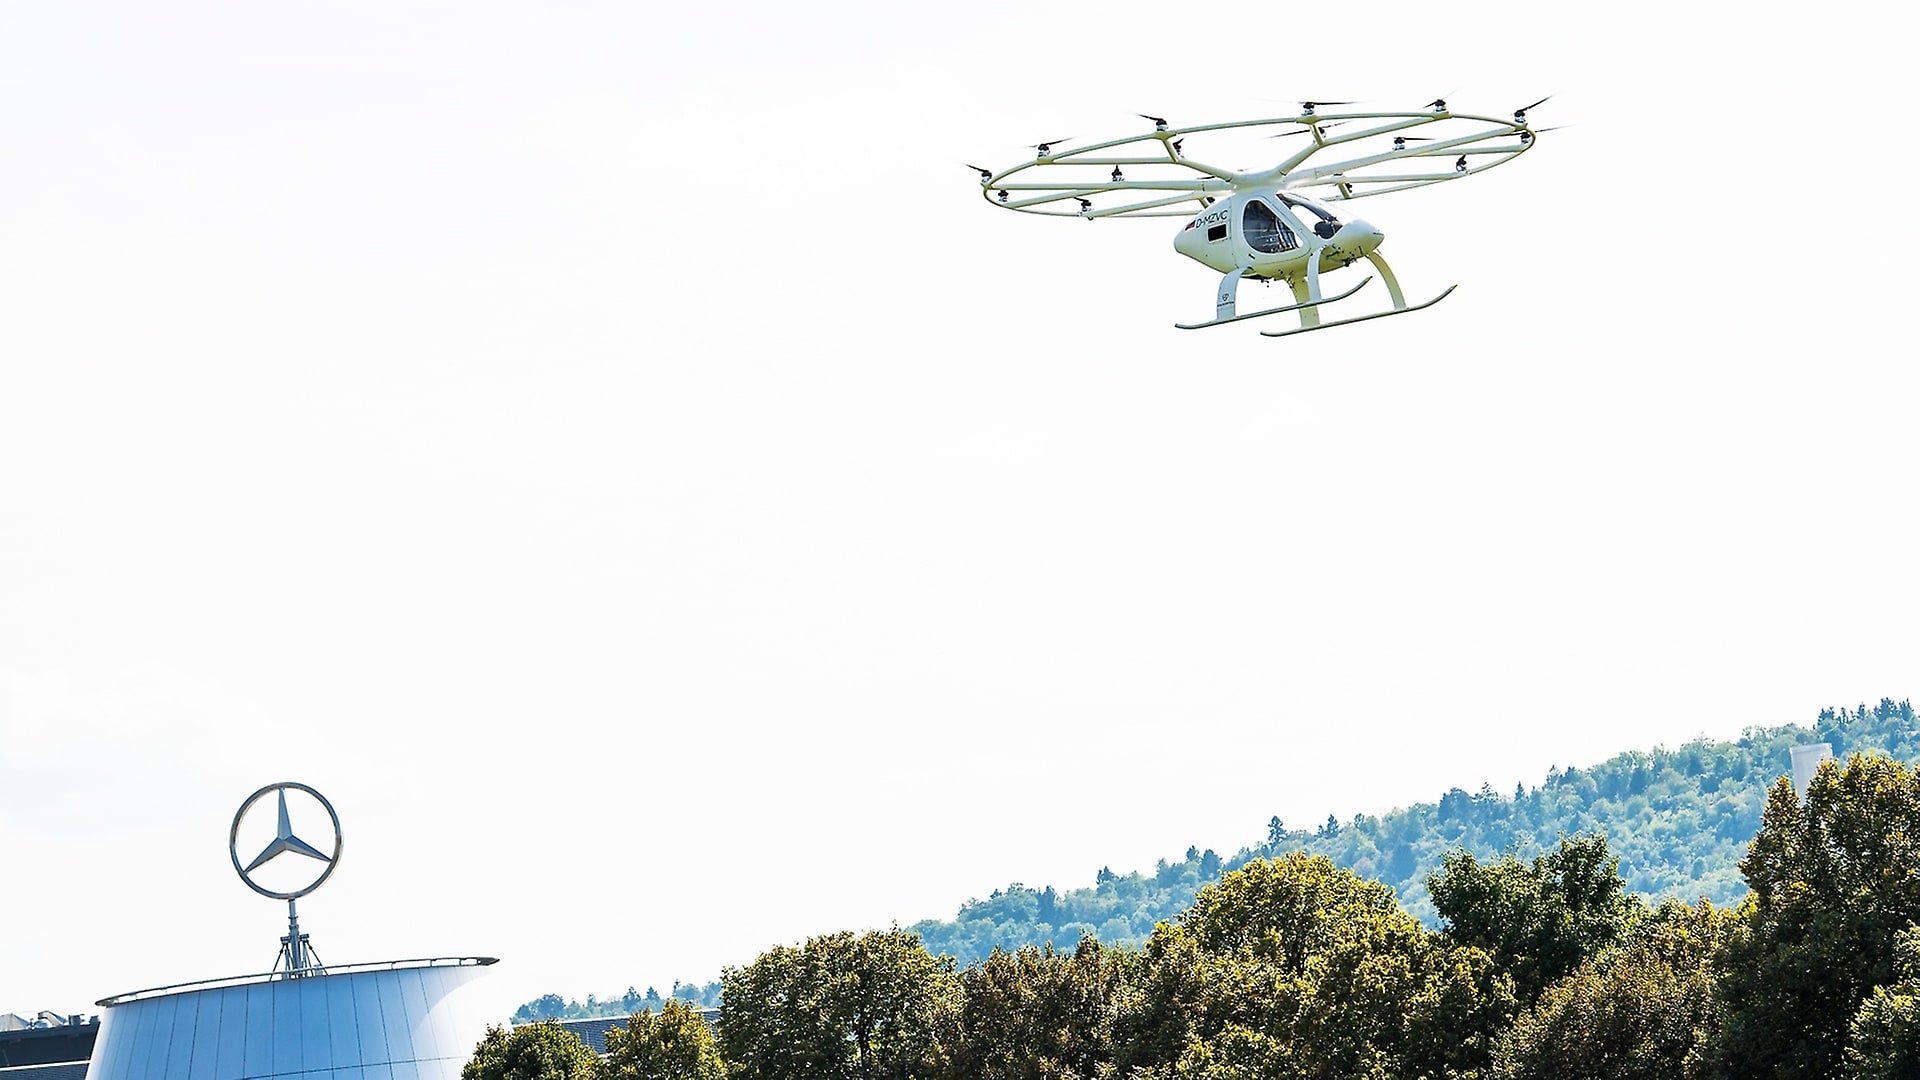 Stuttgart sees first urban flight of Volocopter in Europe.